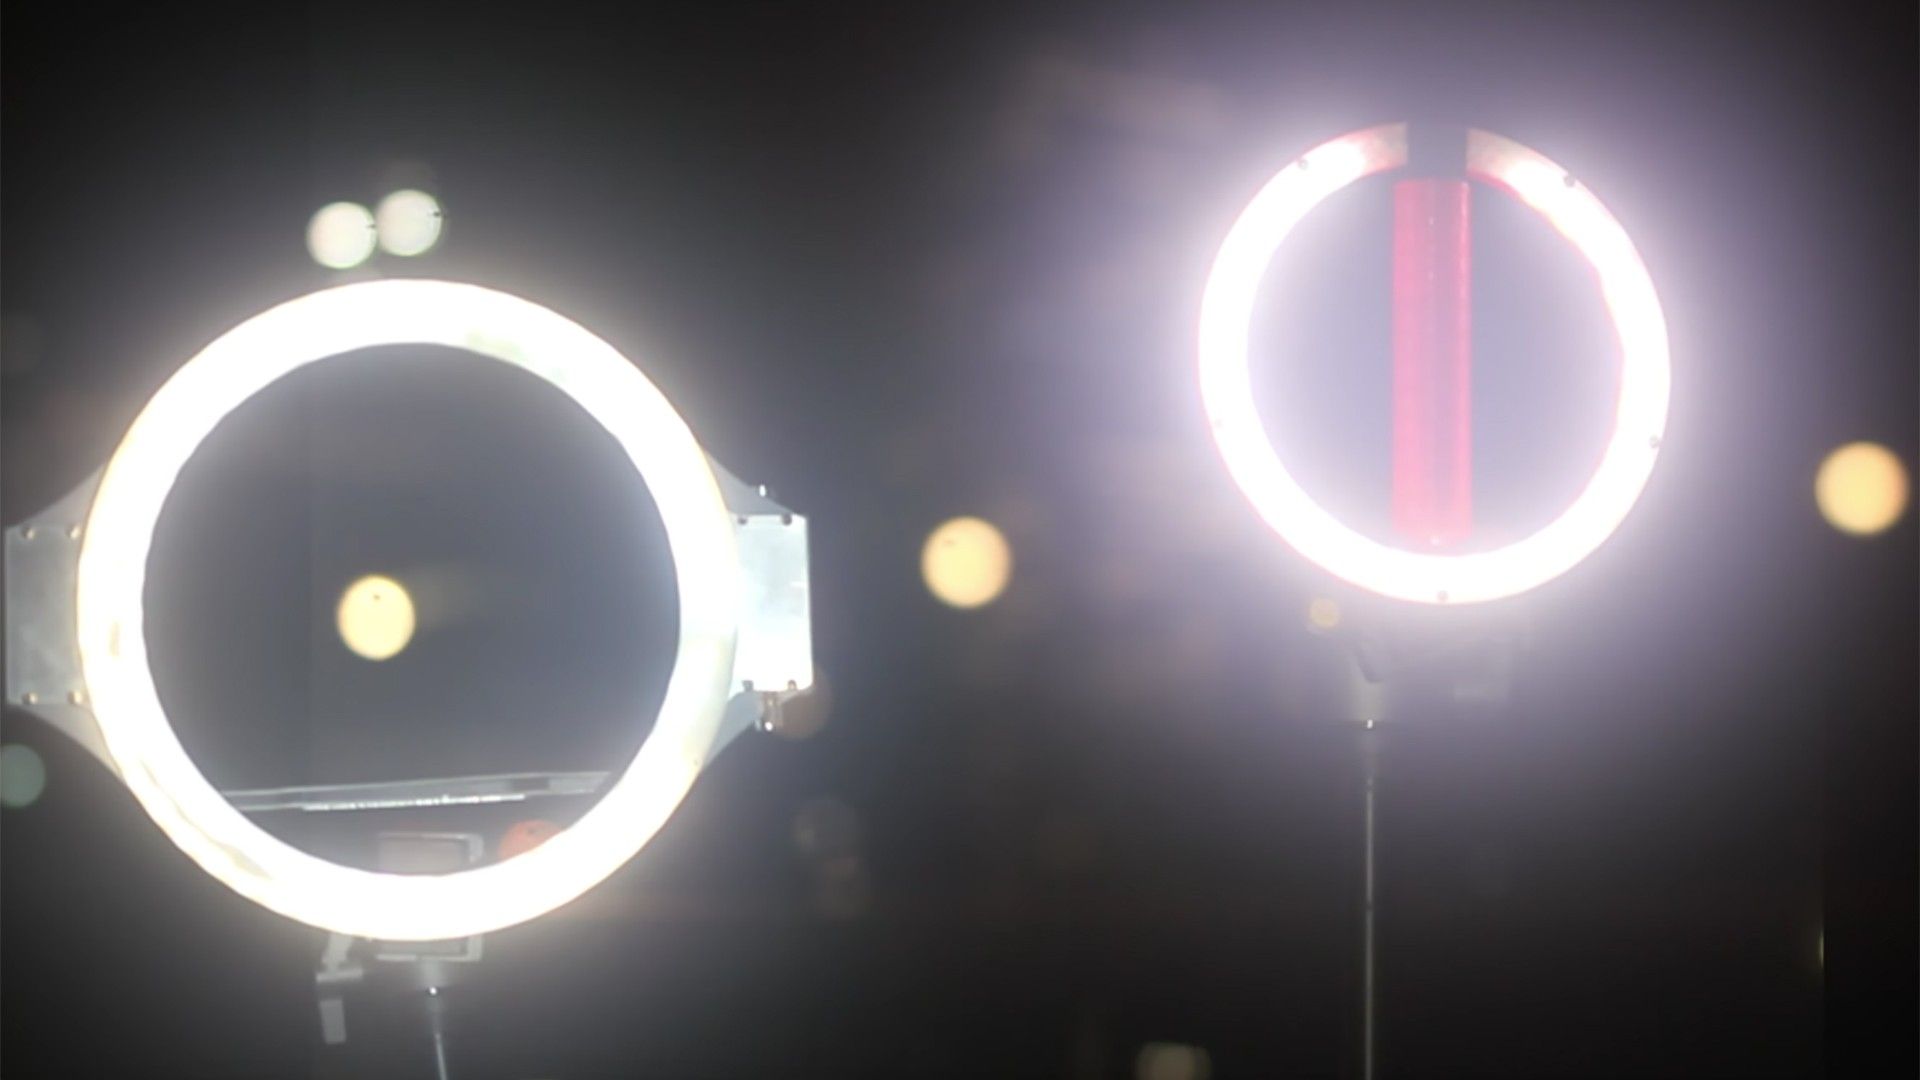 Kickstarter: A New “HOOP” Ring Light That Stabilizes Your Camera